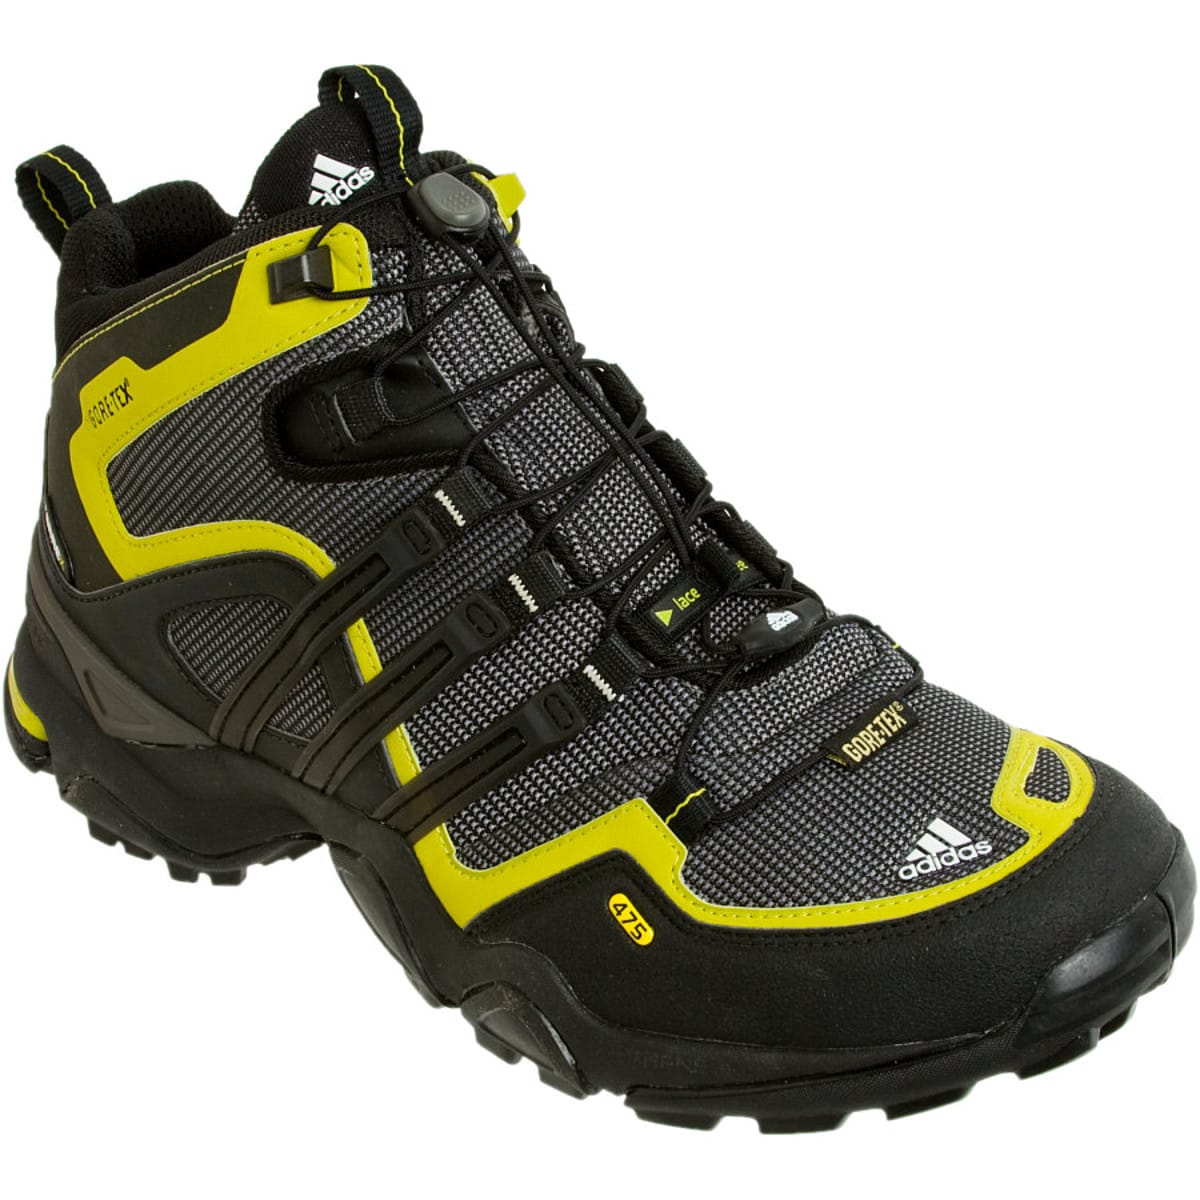 Adidas Outdoor Terrex Fast X FM Mid GTX Hiking Boot - Men's - Footwear